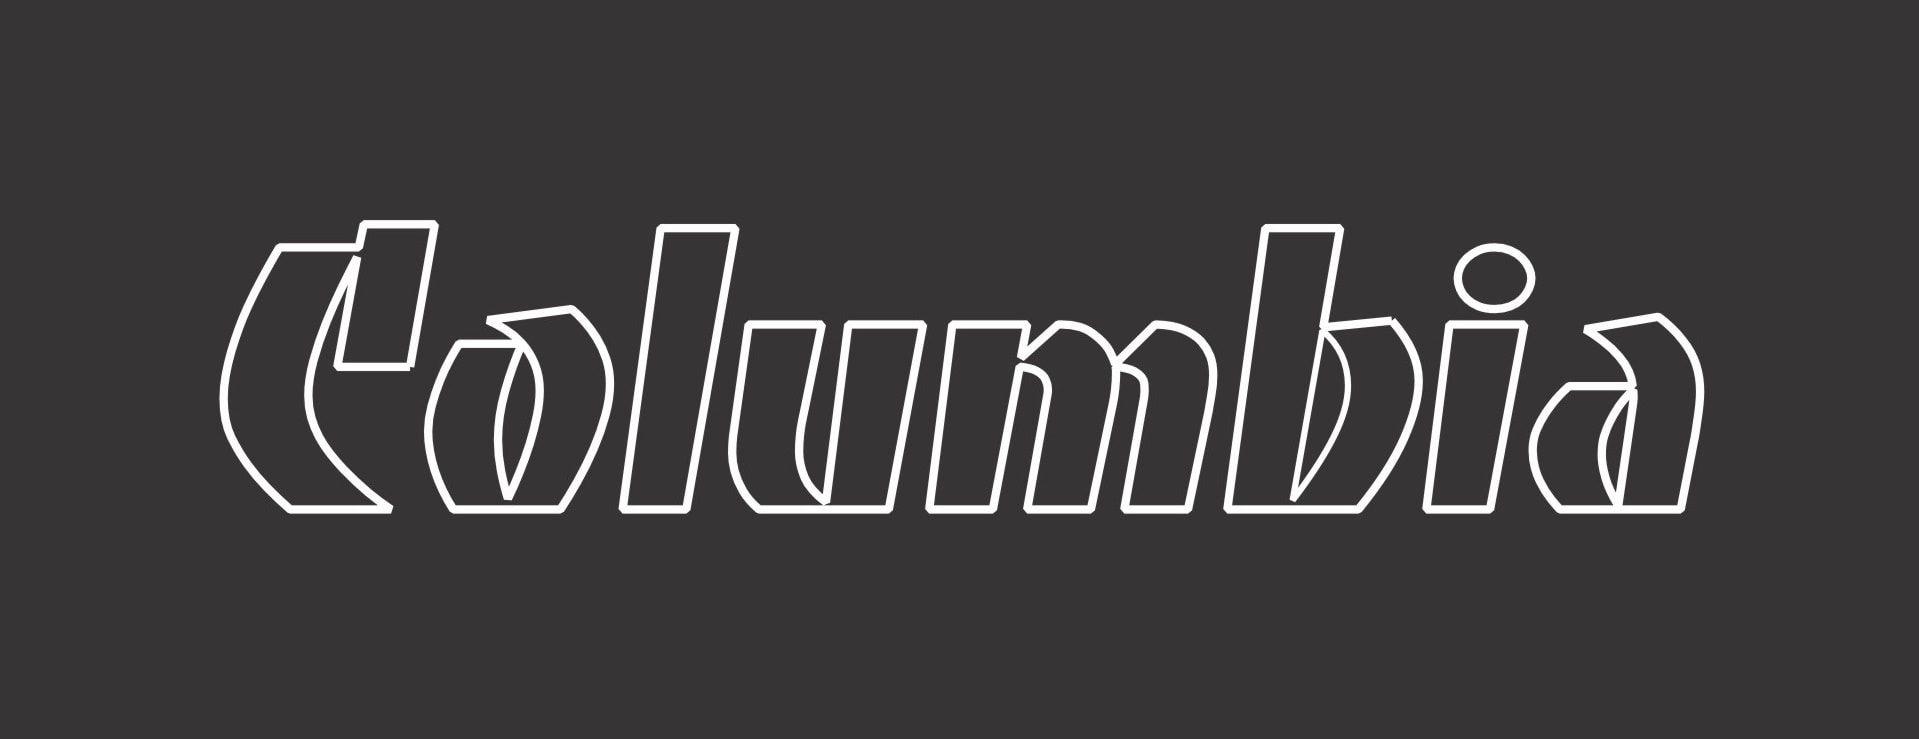 Columbia Box Logo - Columbia Box Wheel Kit